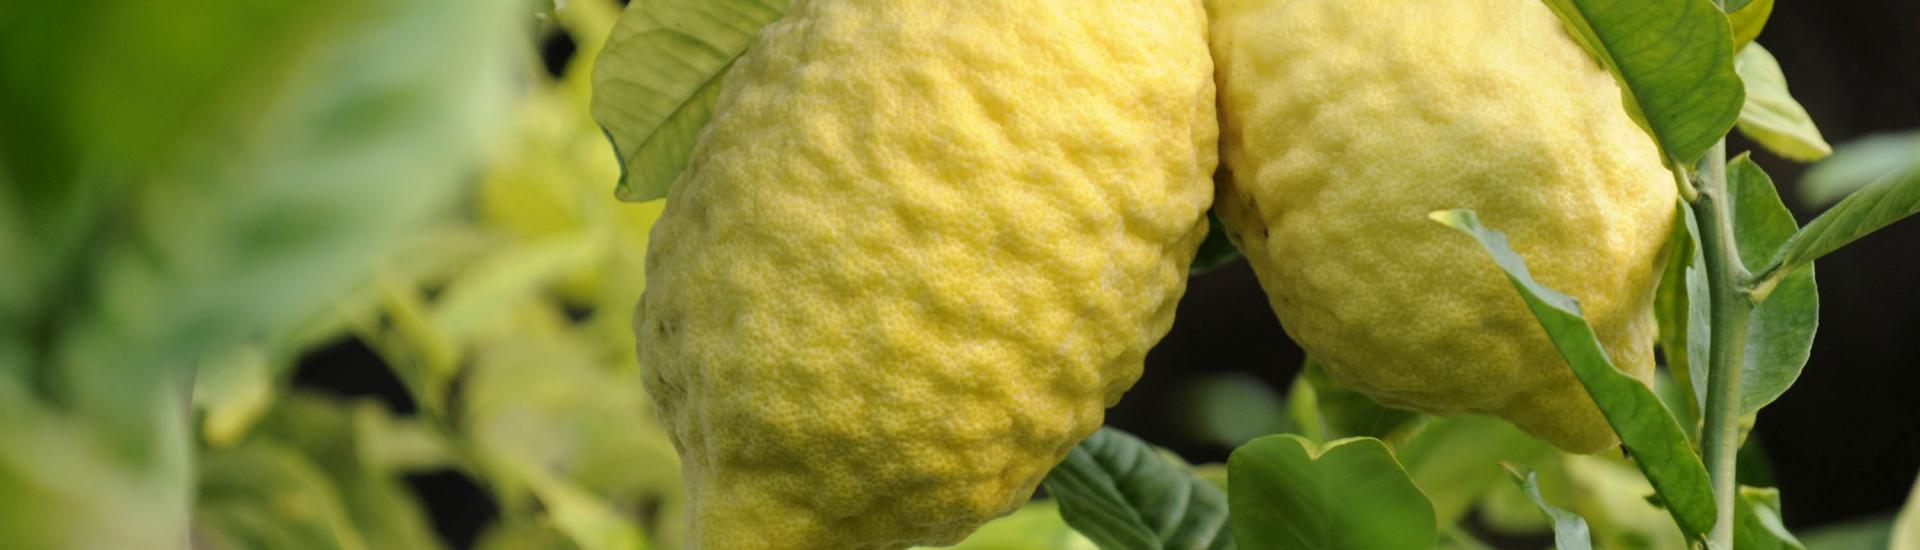 Citron fruit on tree